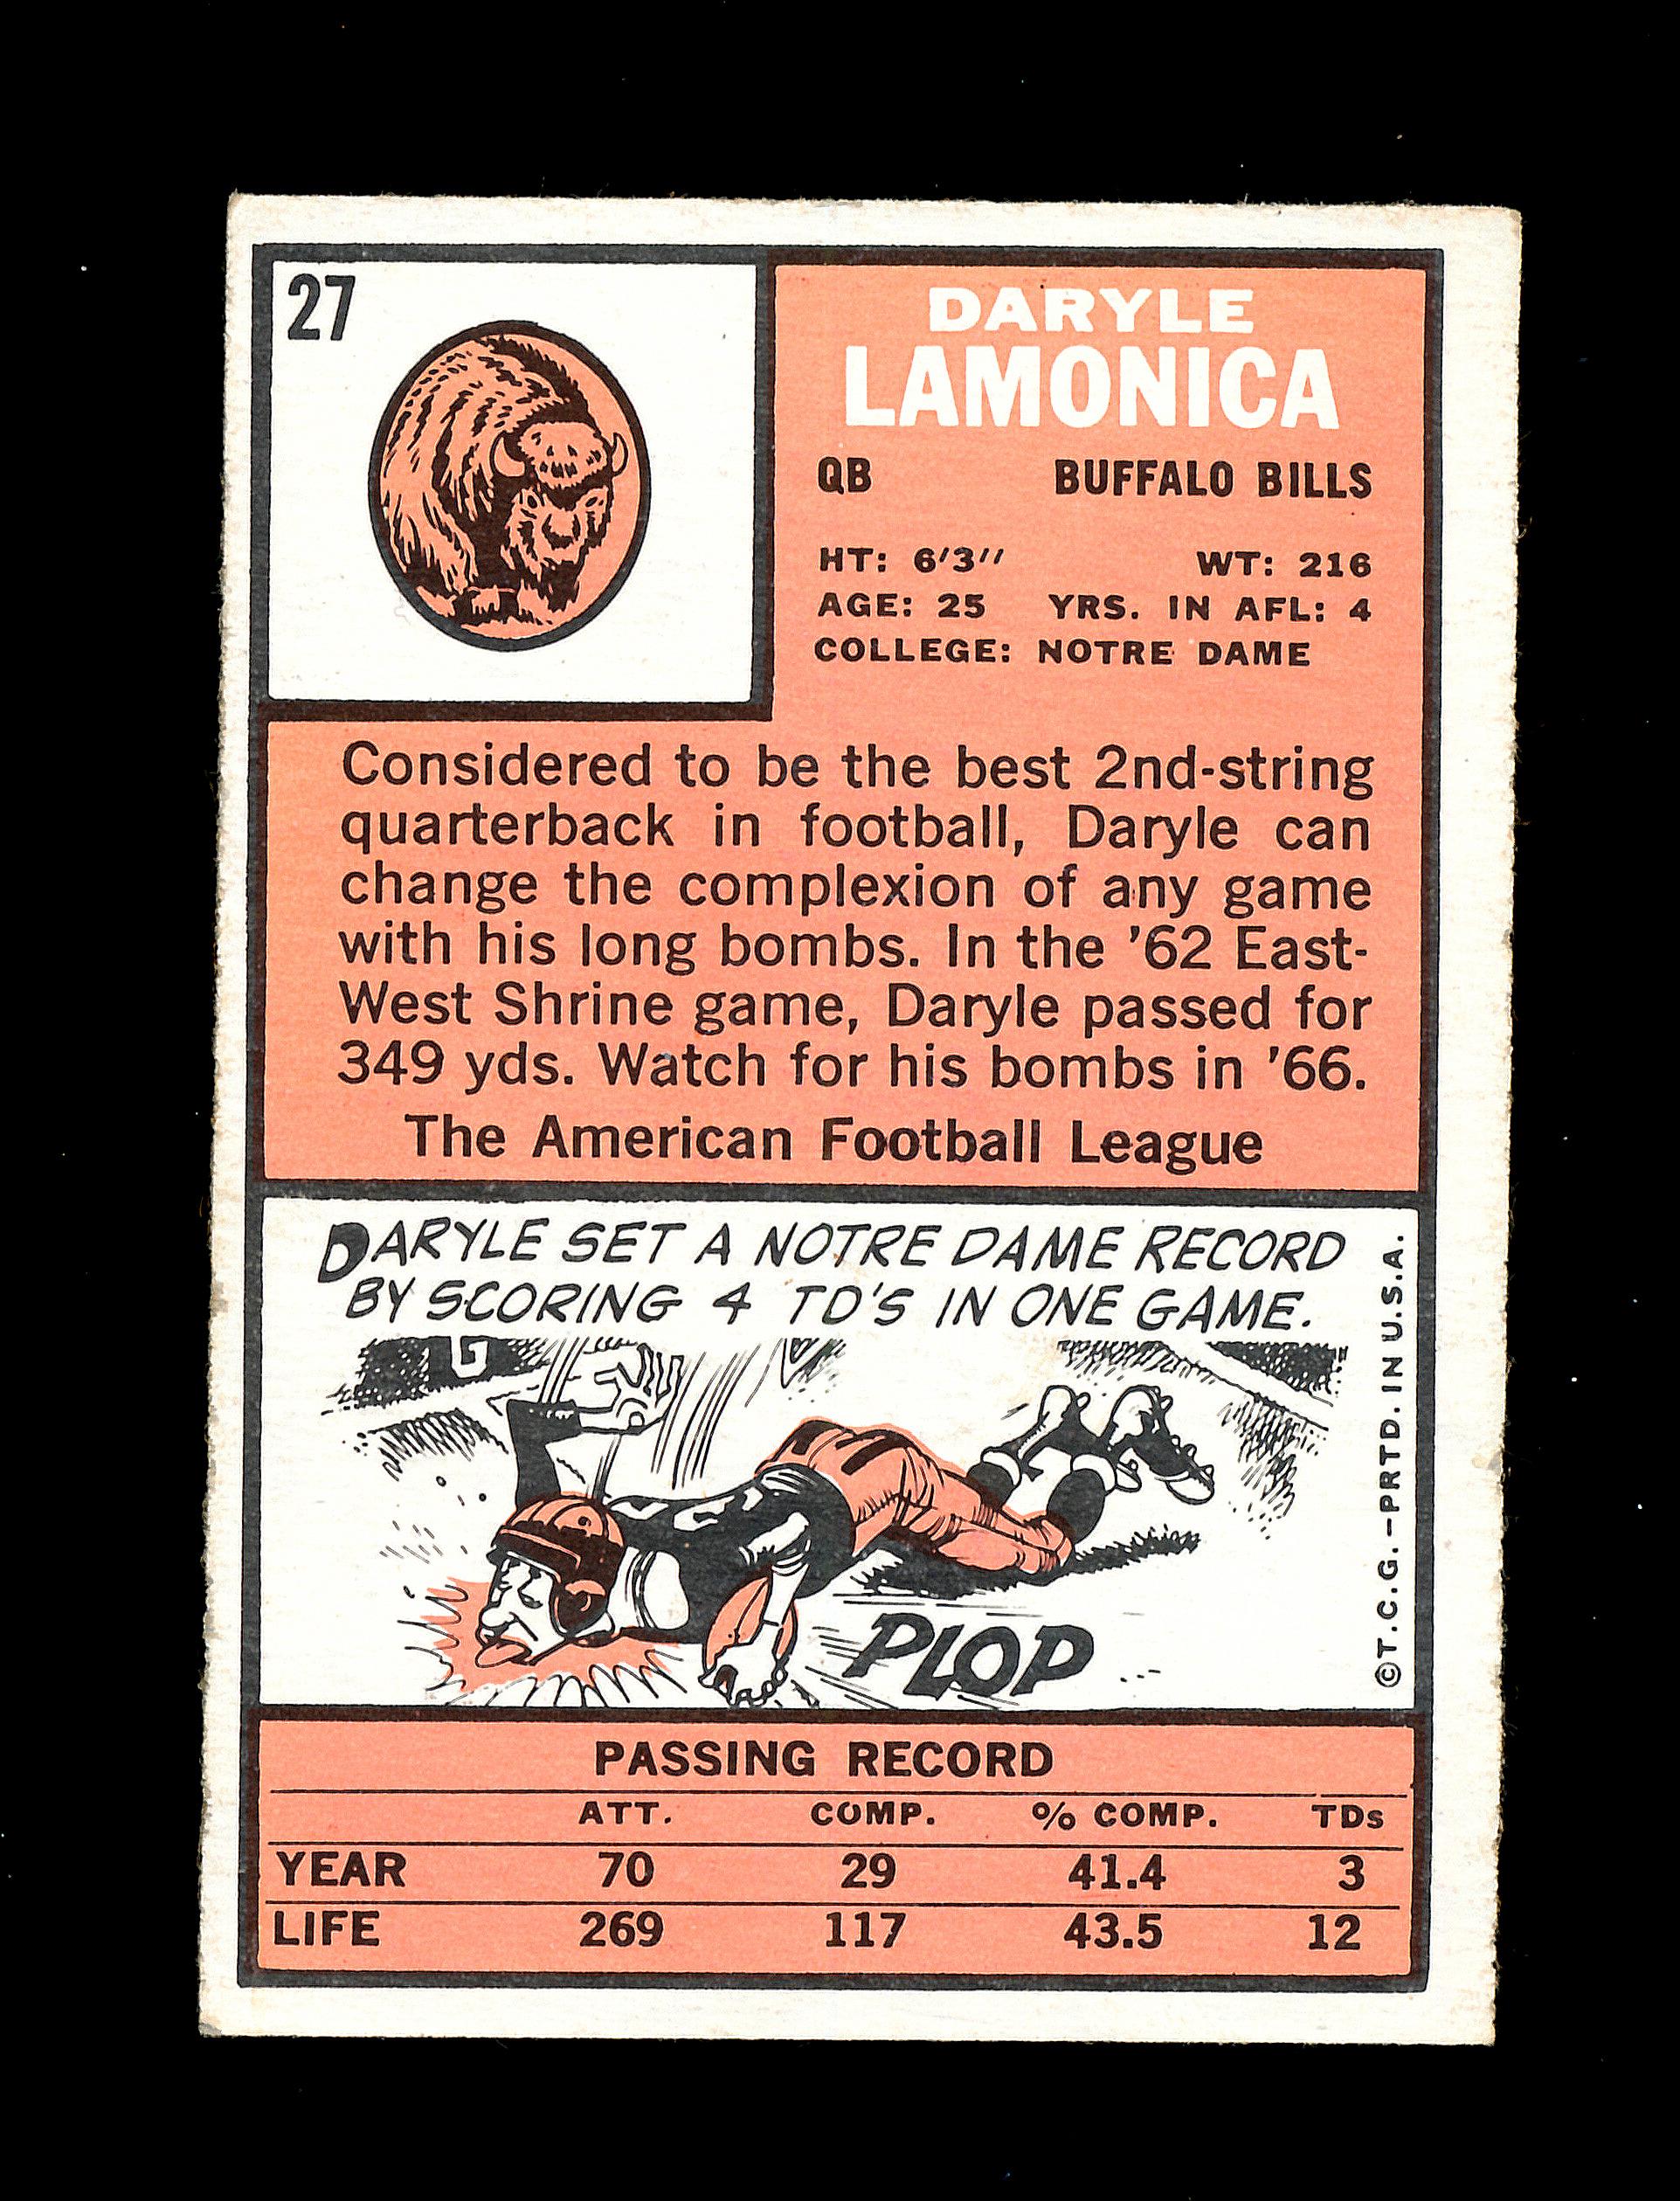 1966 Topps Football Card #27 Daryle Lamonica Buffalo Bills. NM Condition.